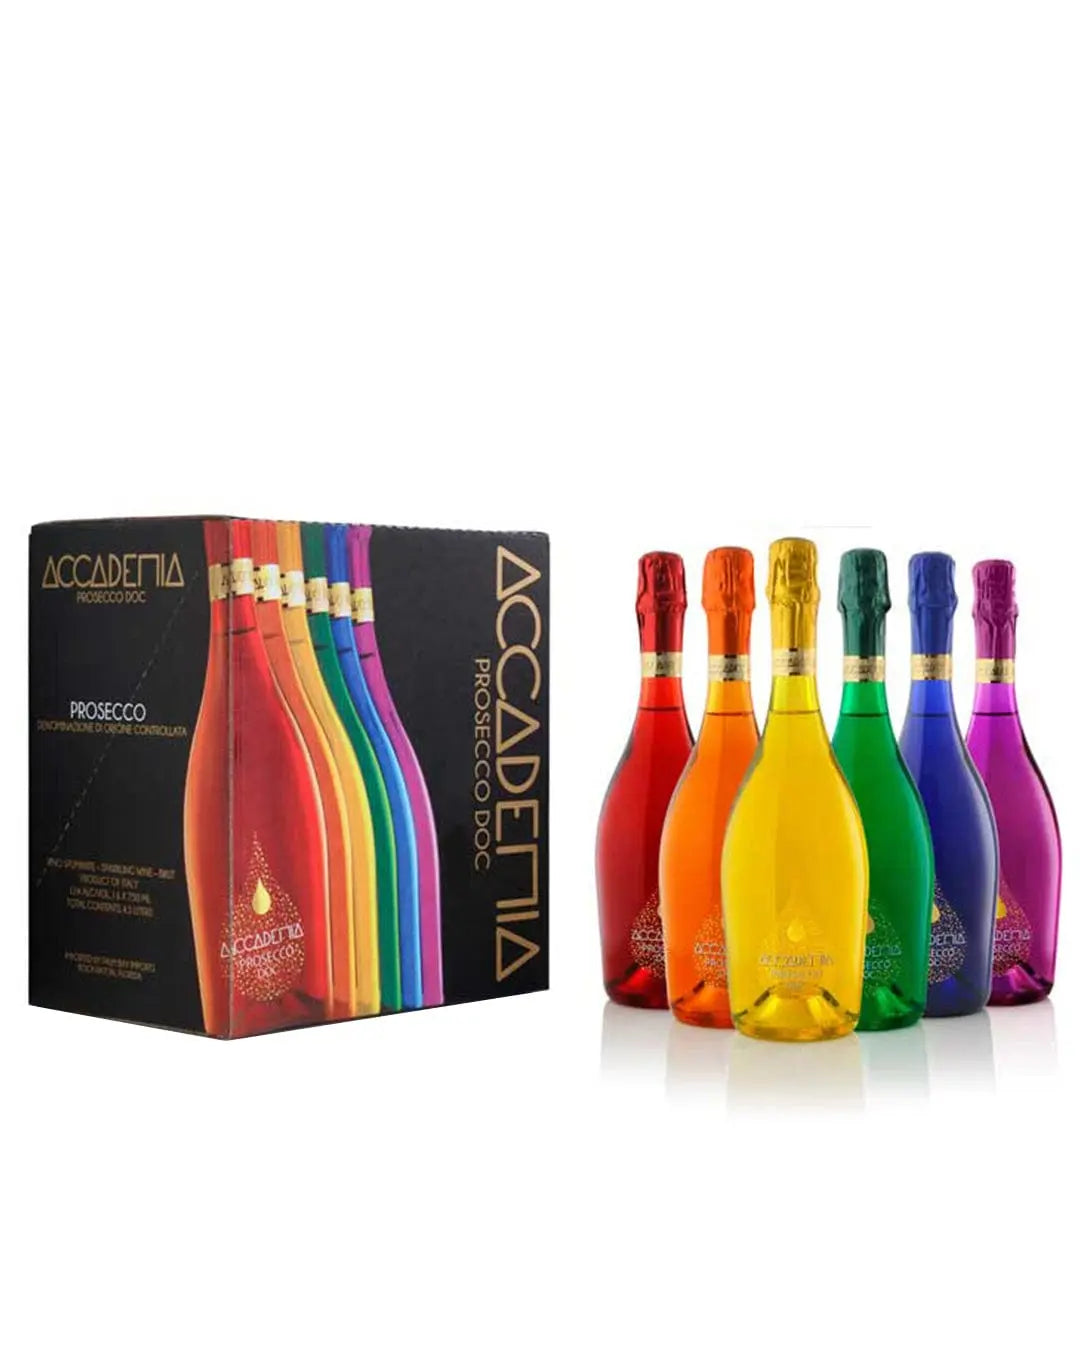 Bottega Accademia Prosecco Rainbow Mixed Case, 6 x 75 cl Champagne & Sparkling